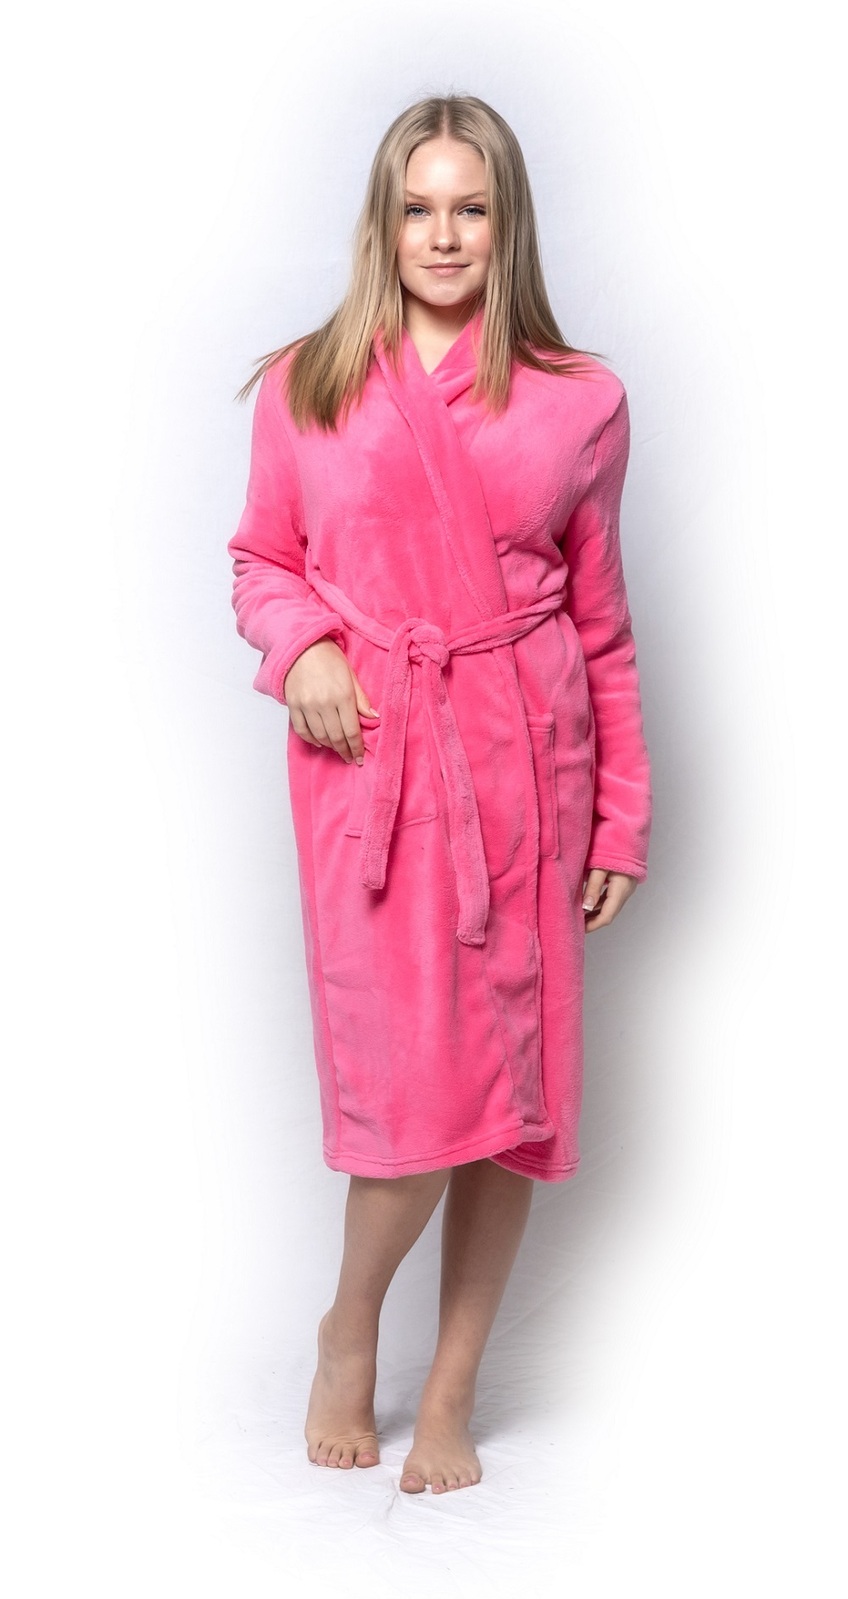 Natori Shangri-La Robe | Order Our Classic Robe & More Online